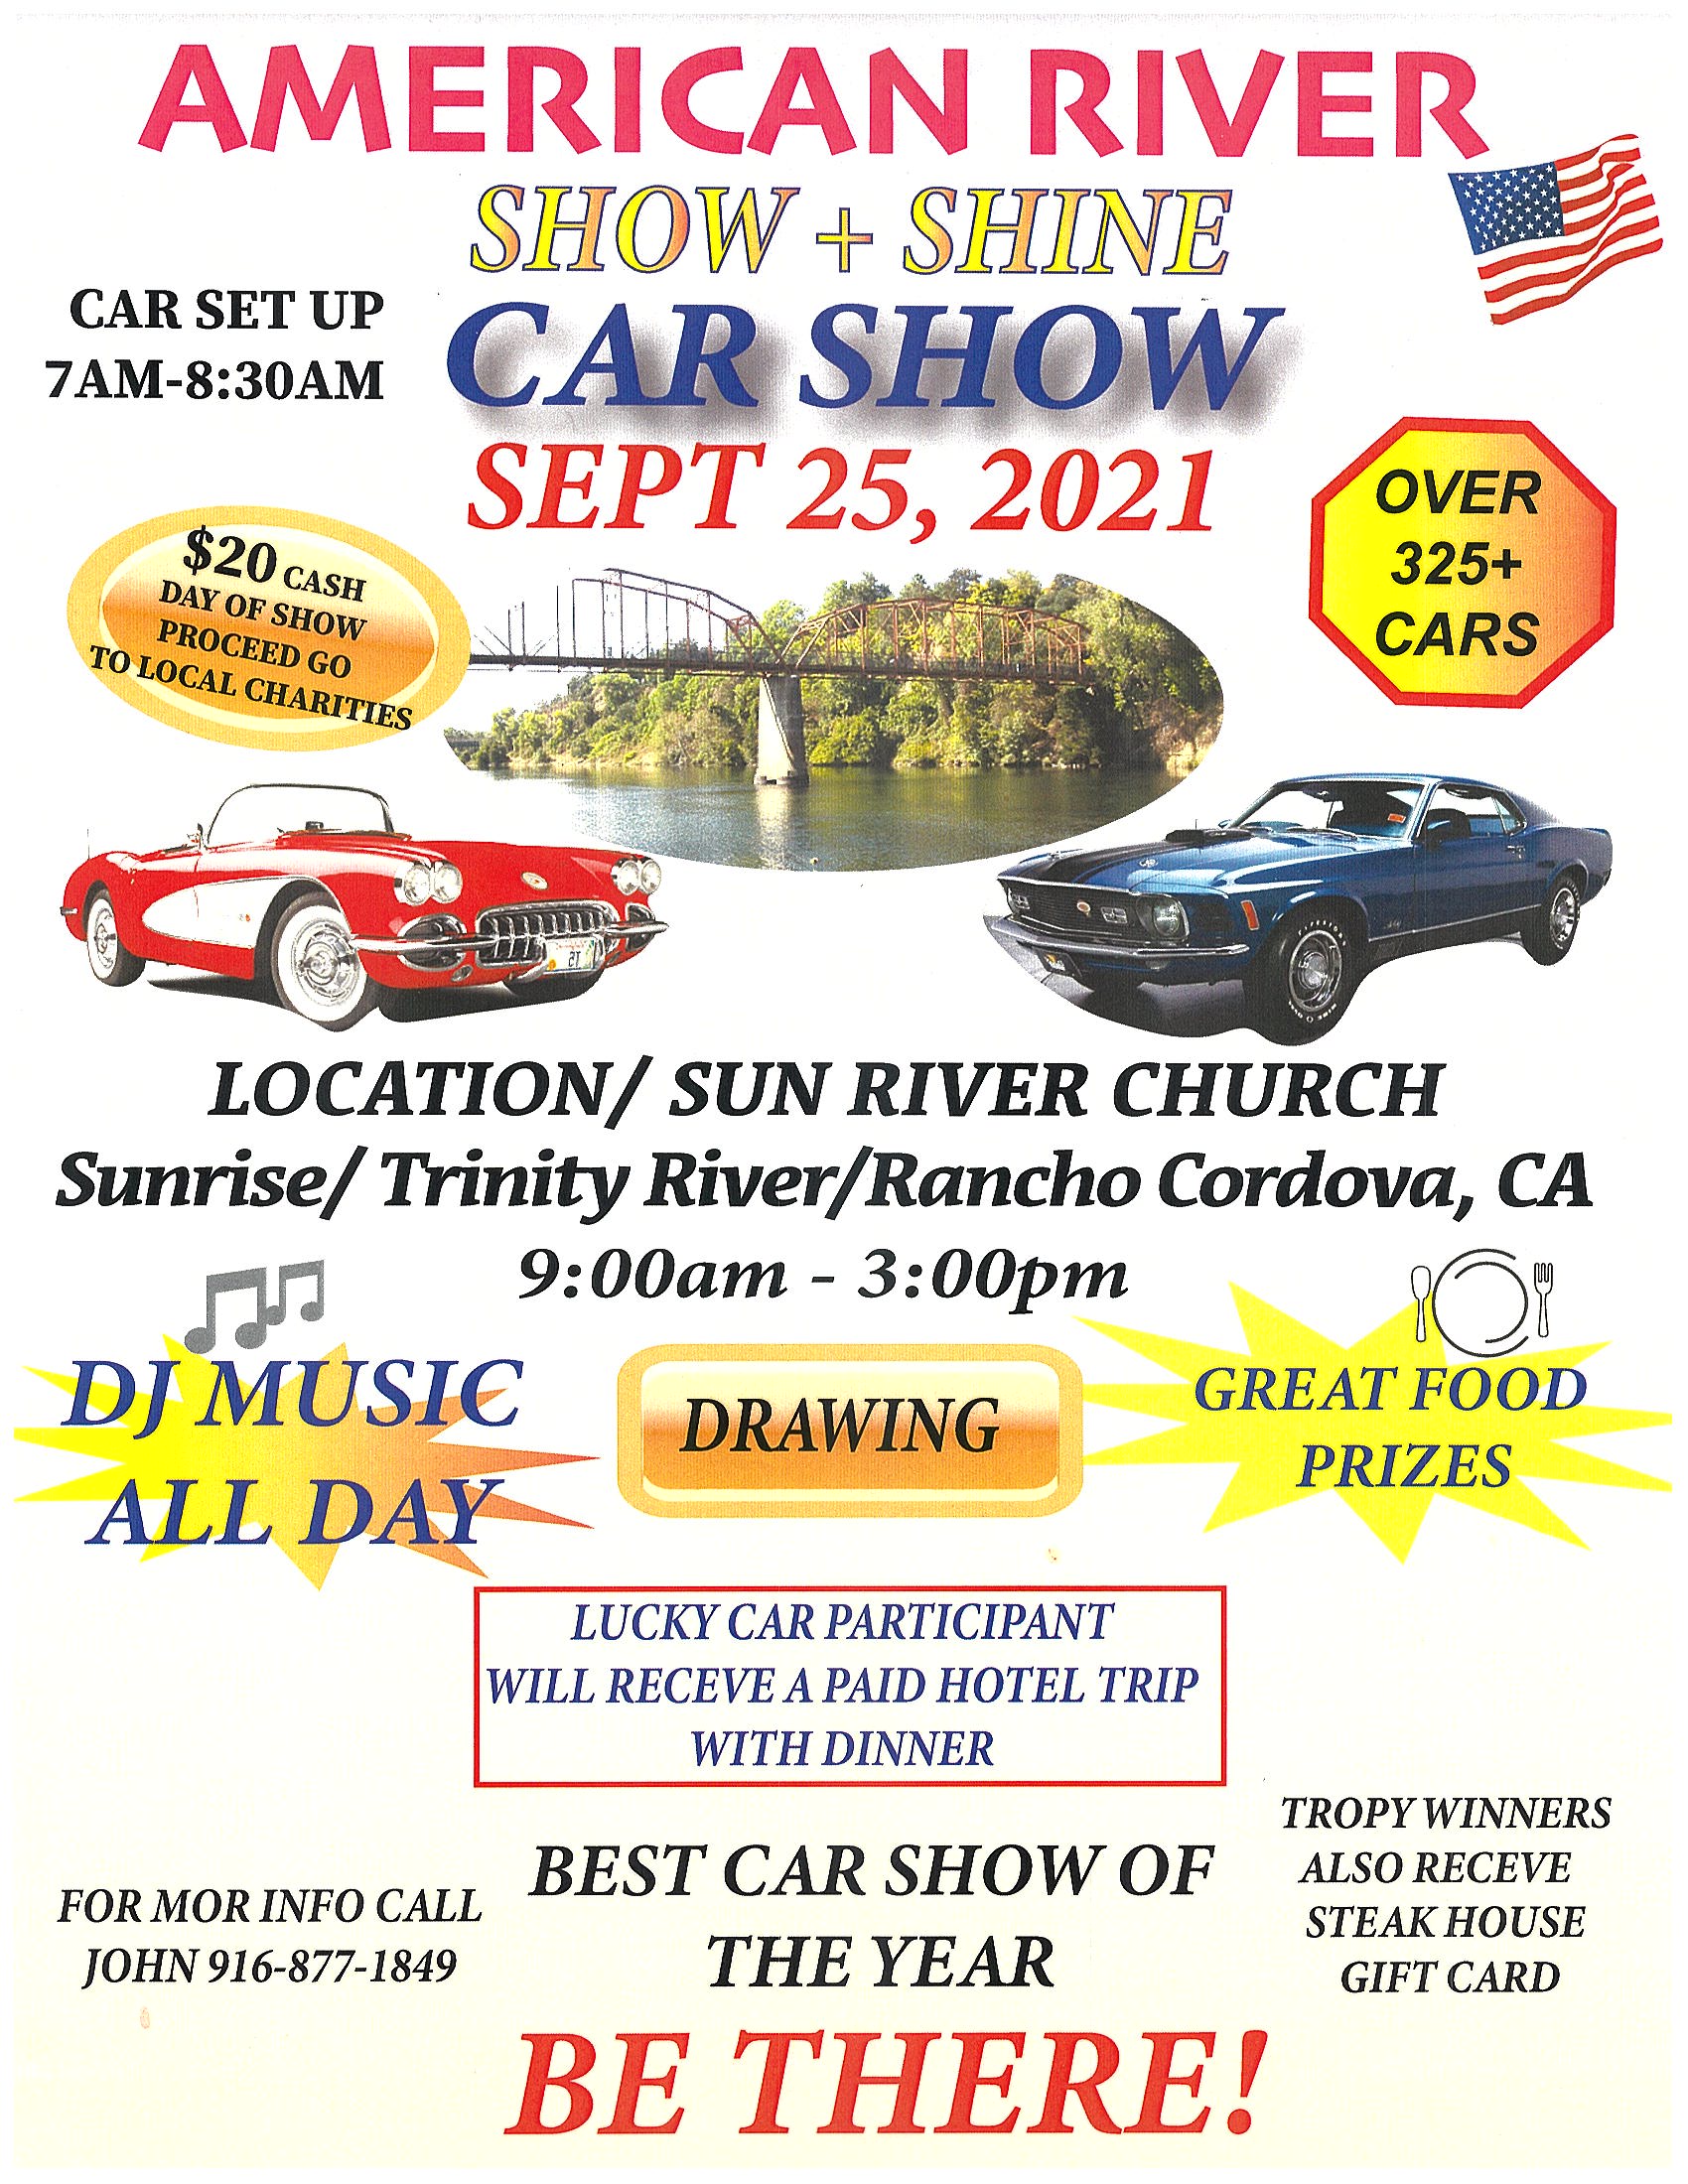 American River Show & Shine Car Show